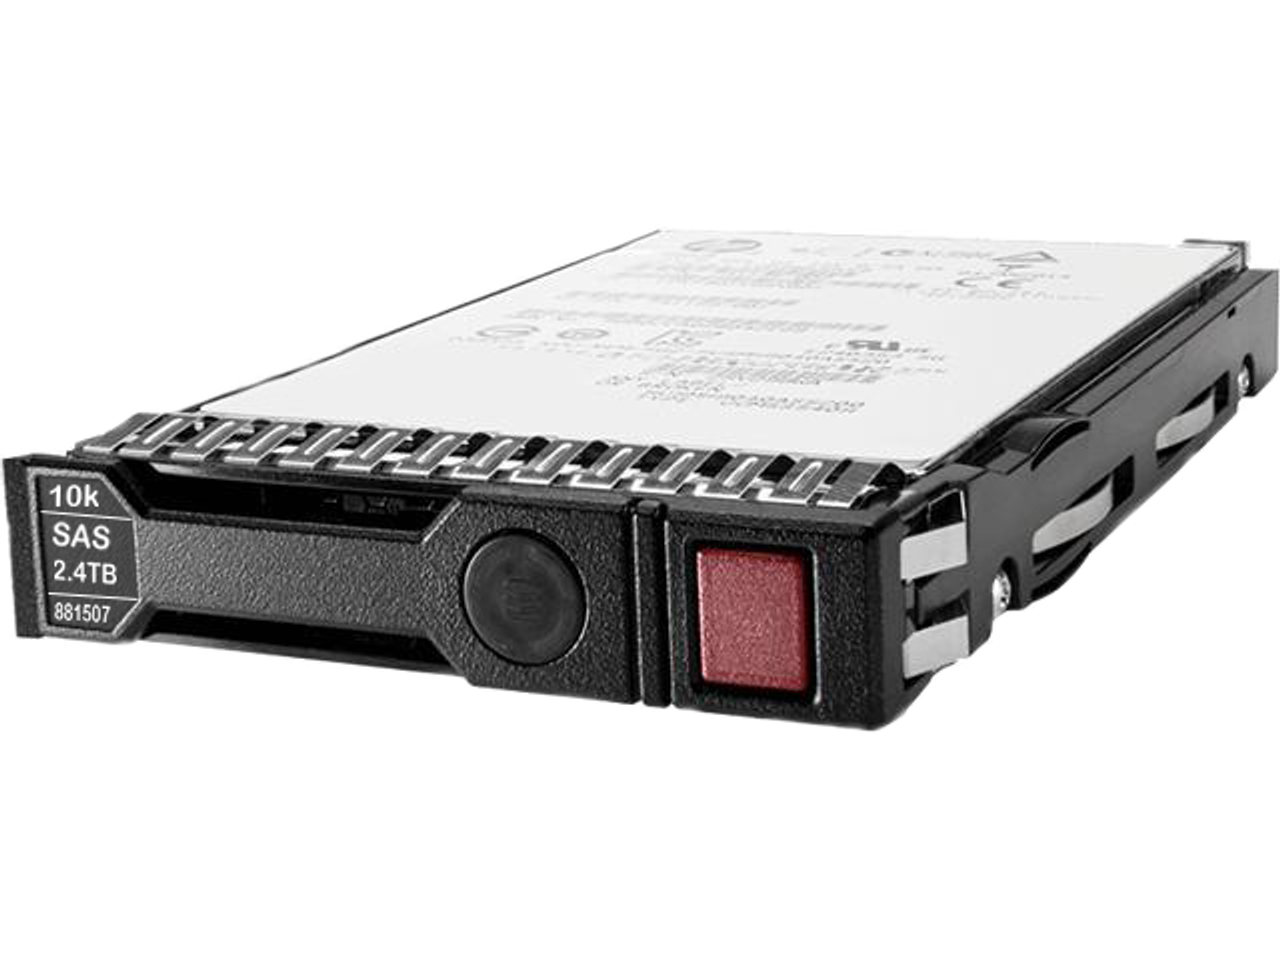 HP 2.4TB 12G SAS 10K SFF SC HDD (881457-B21) Server Hard Drive